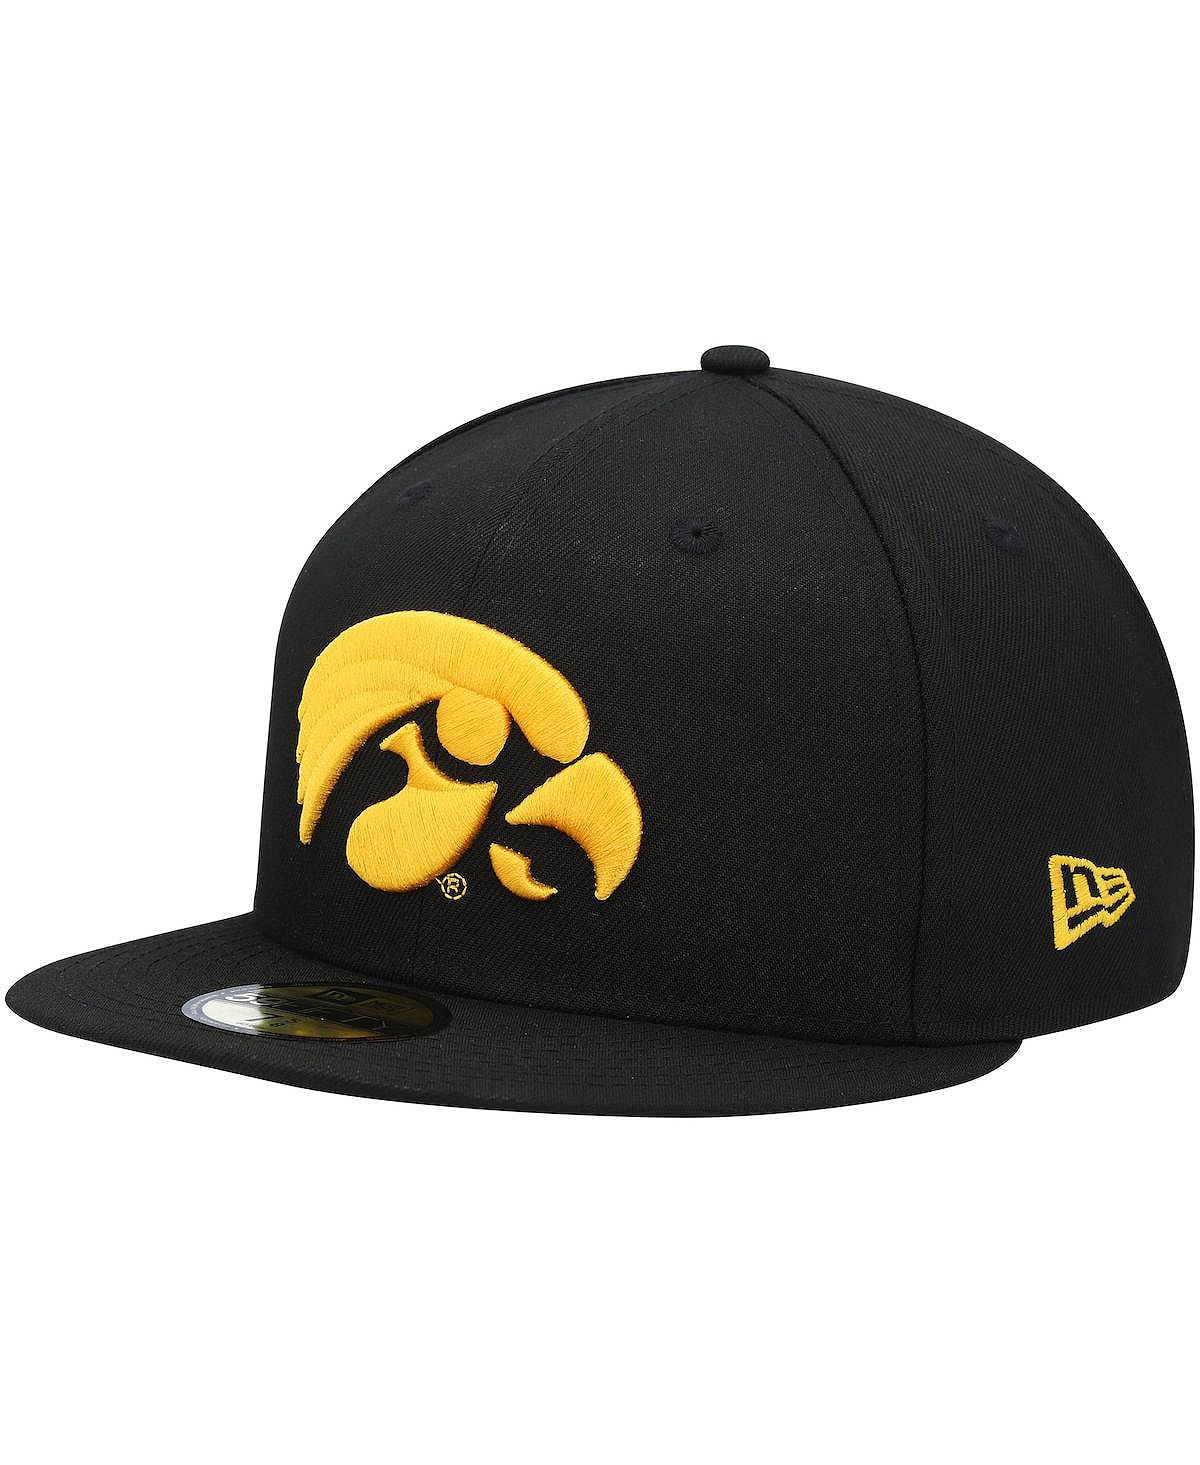 Мужская базовая шляпа с логотипом Iowa Hawkeyes Primary Team черного цвета 59FIFTY New Era